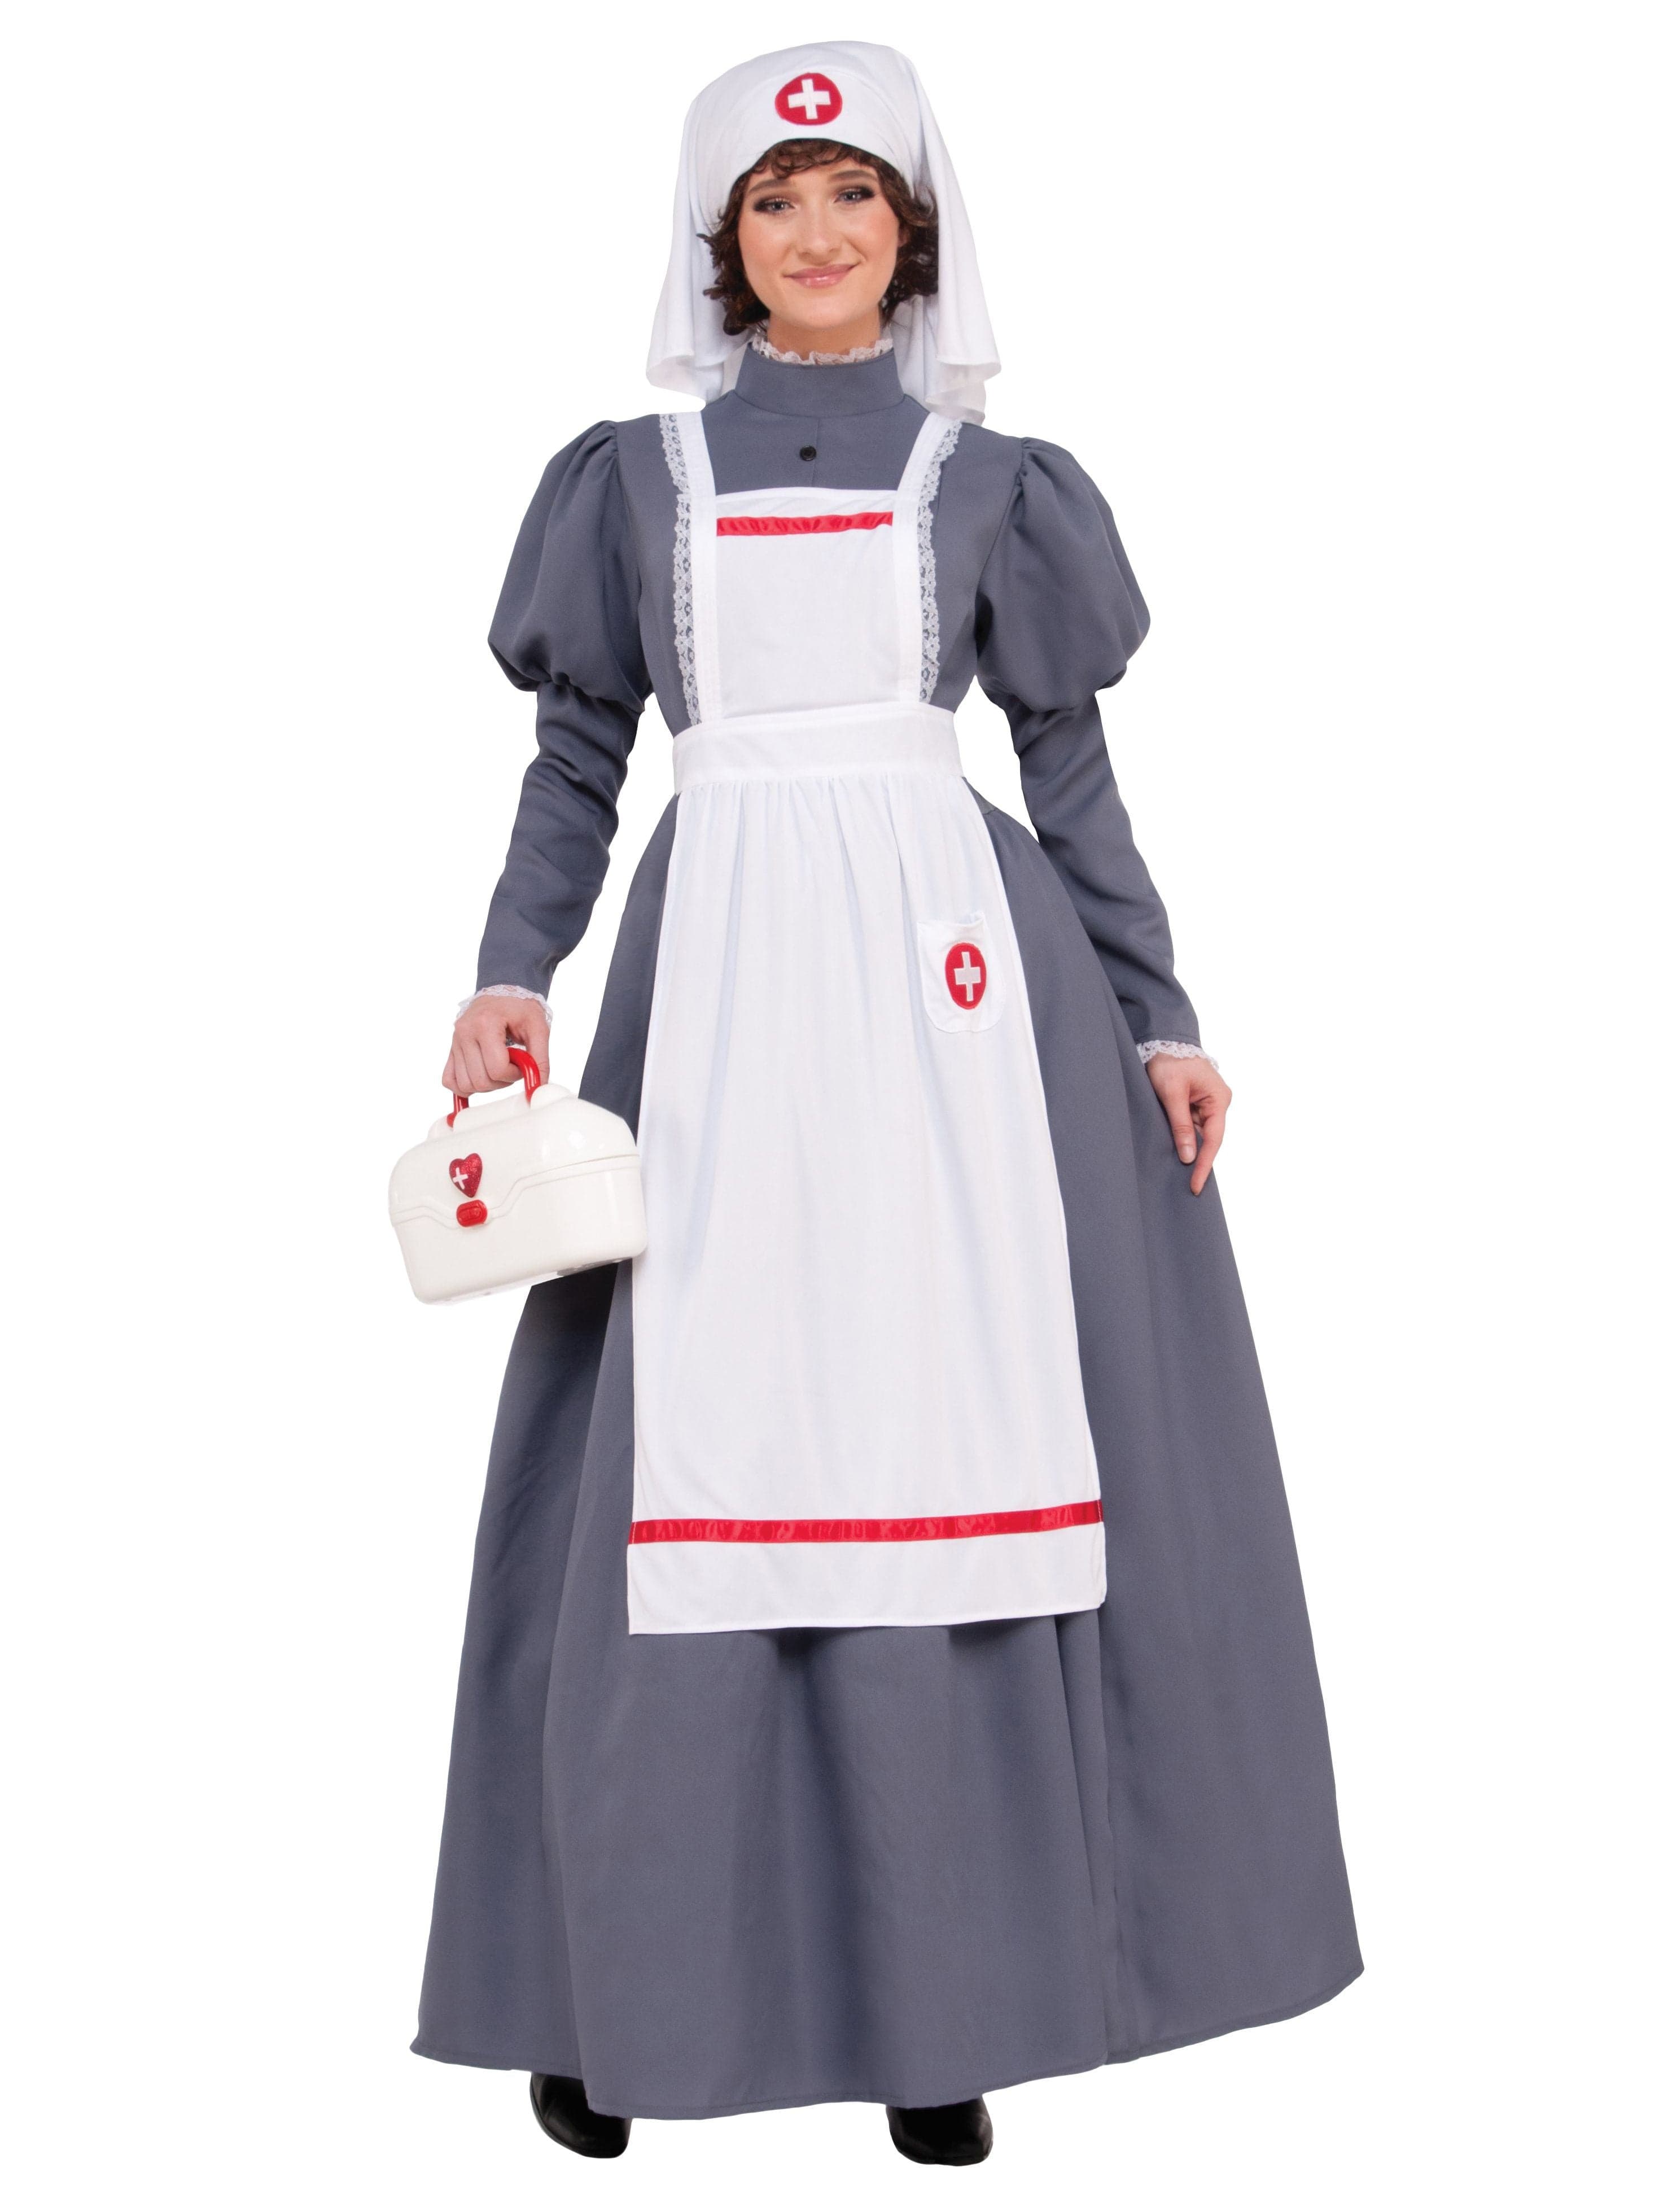 Adult Civil War Nurse Costume - costumes.com